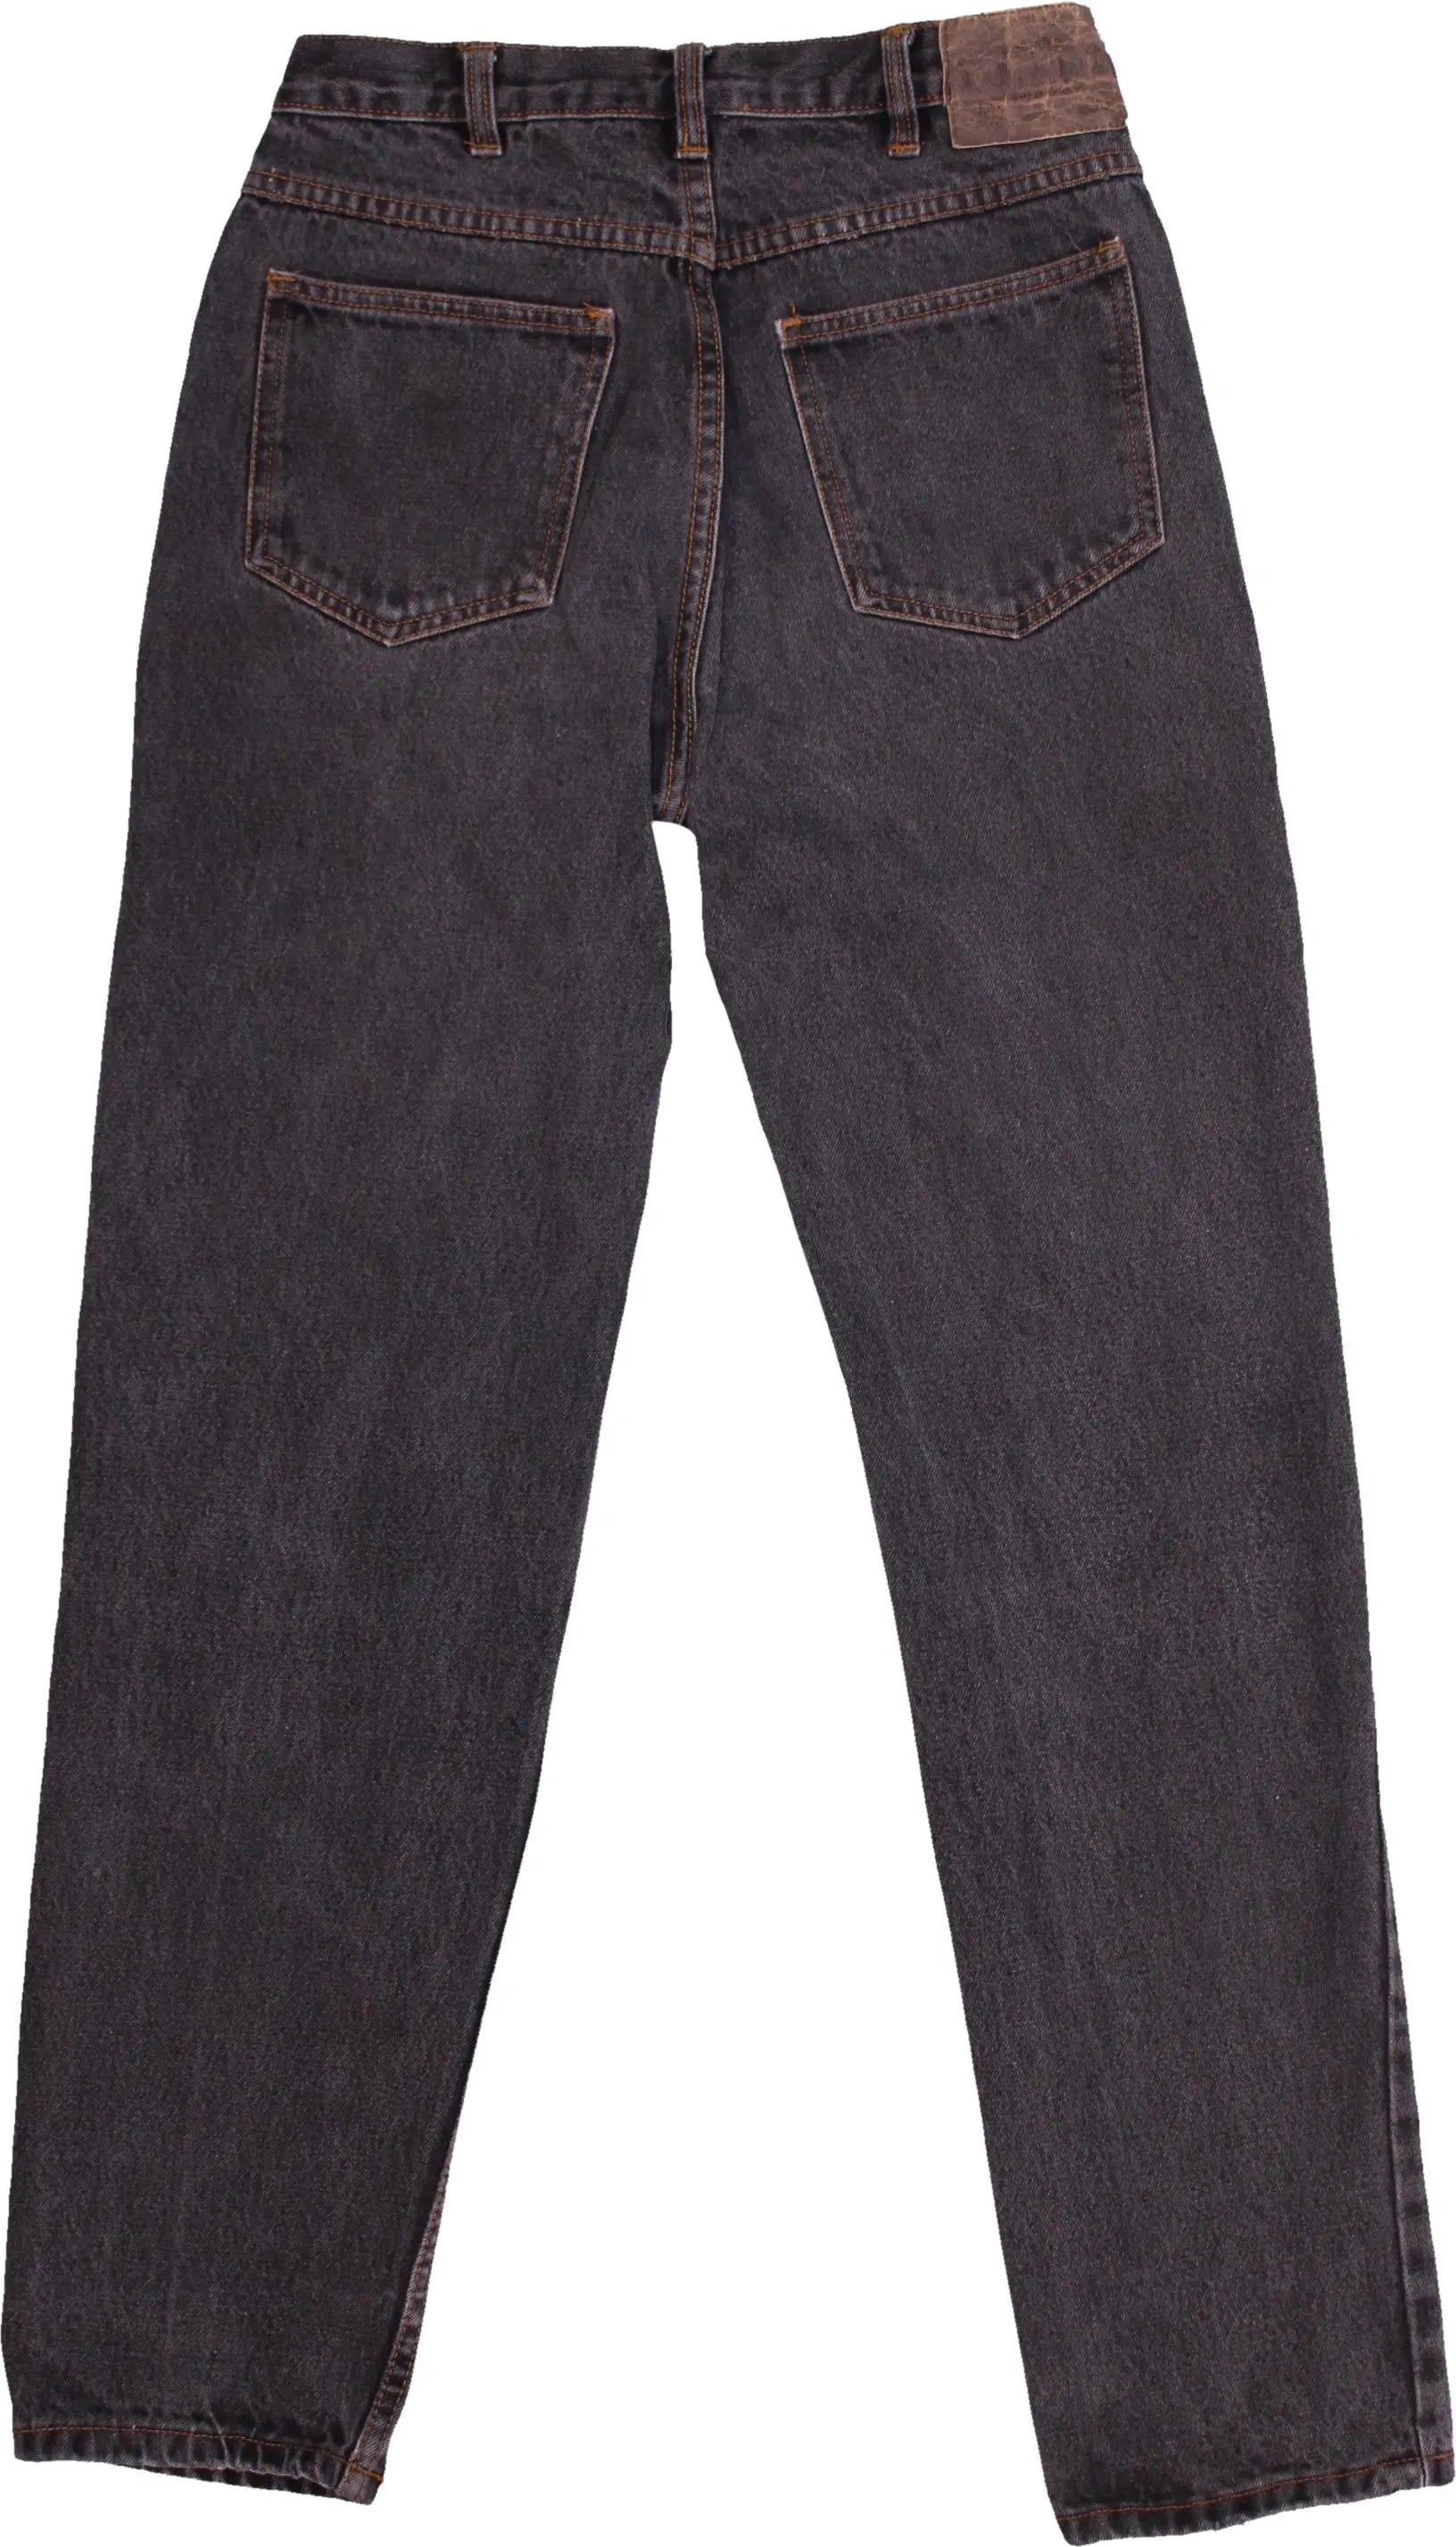 Top Jeans - Denim Jeans Regular Fit- ThriftTale.com - Vintage and second handclothing